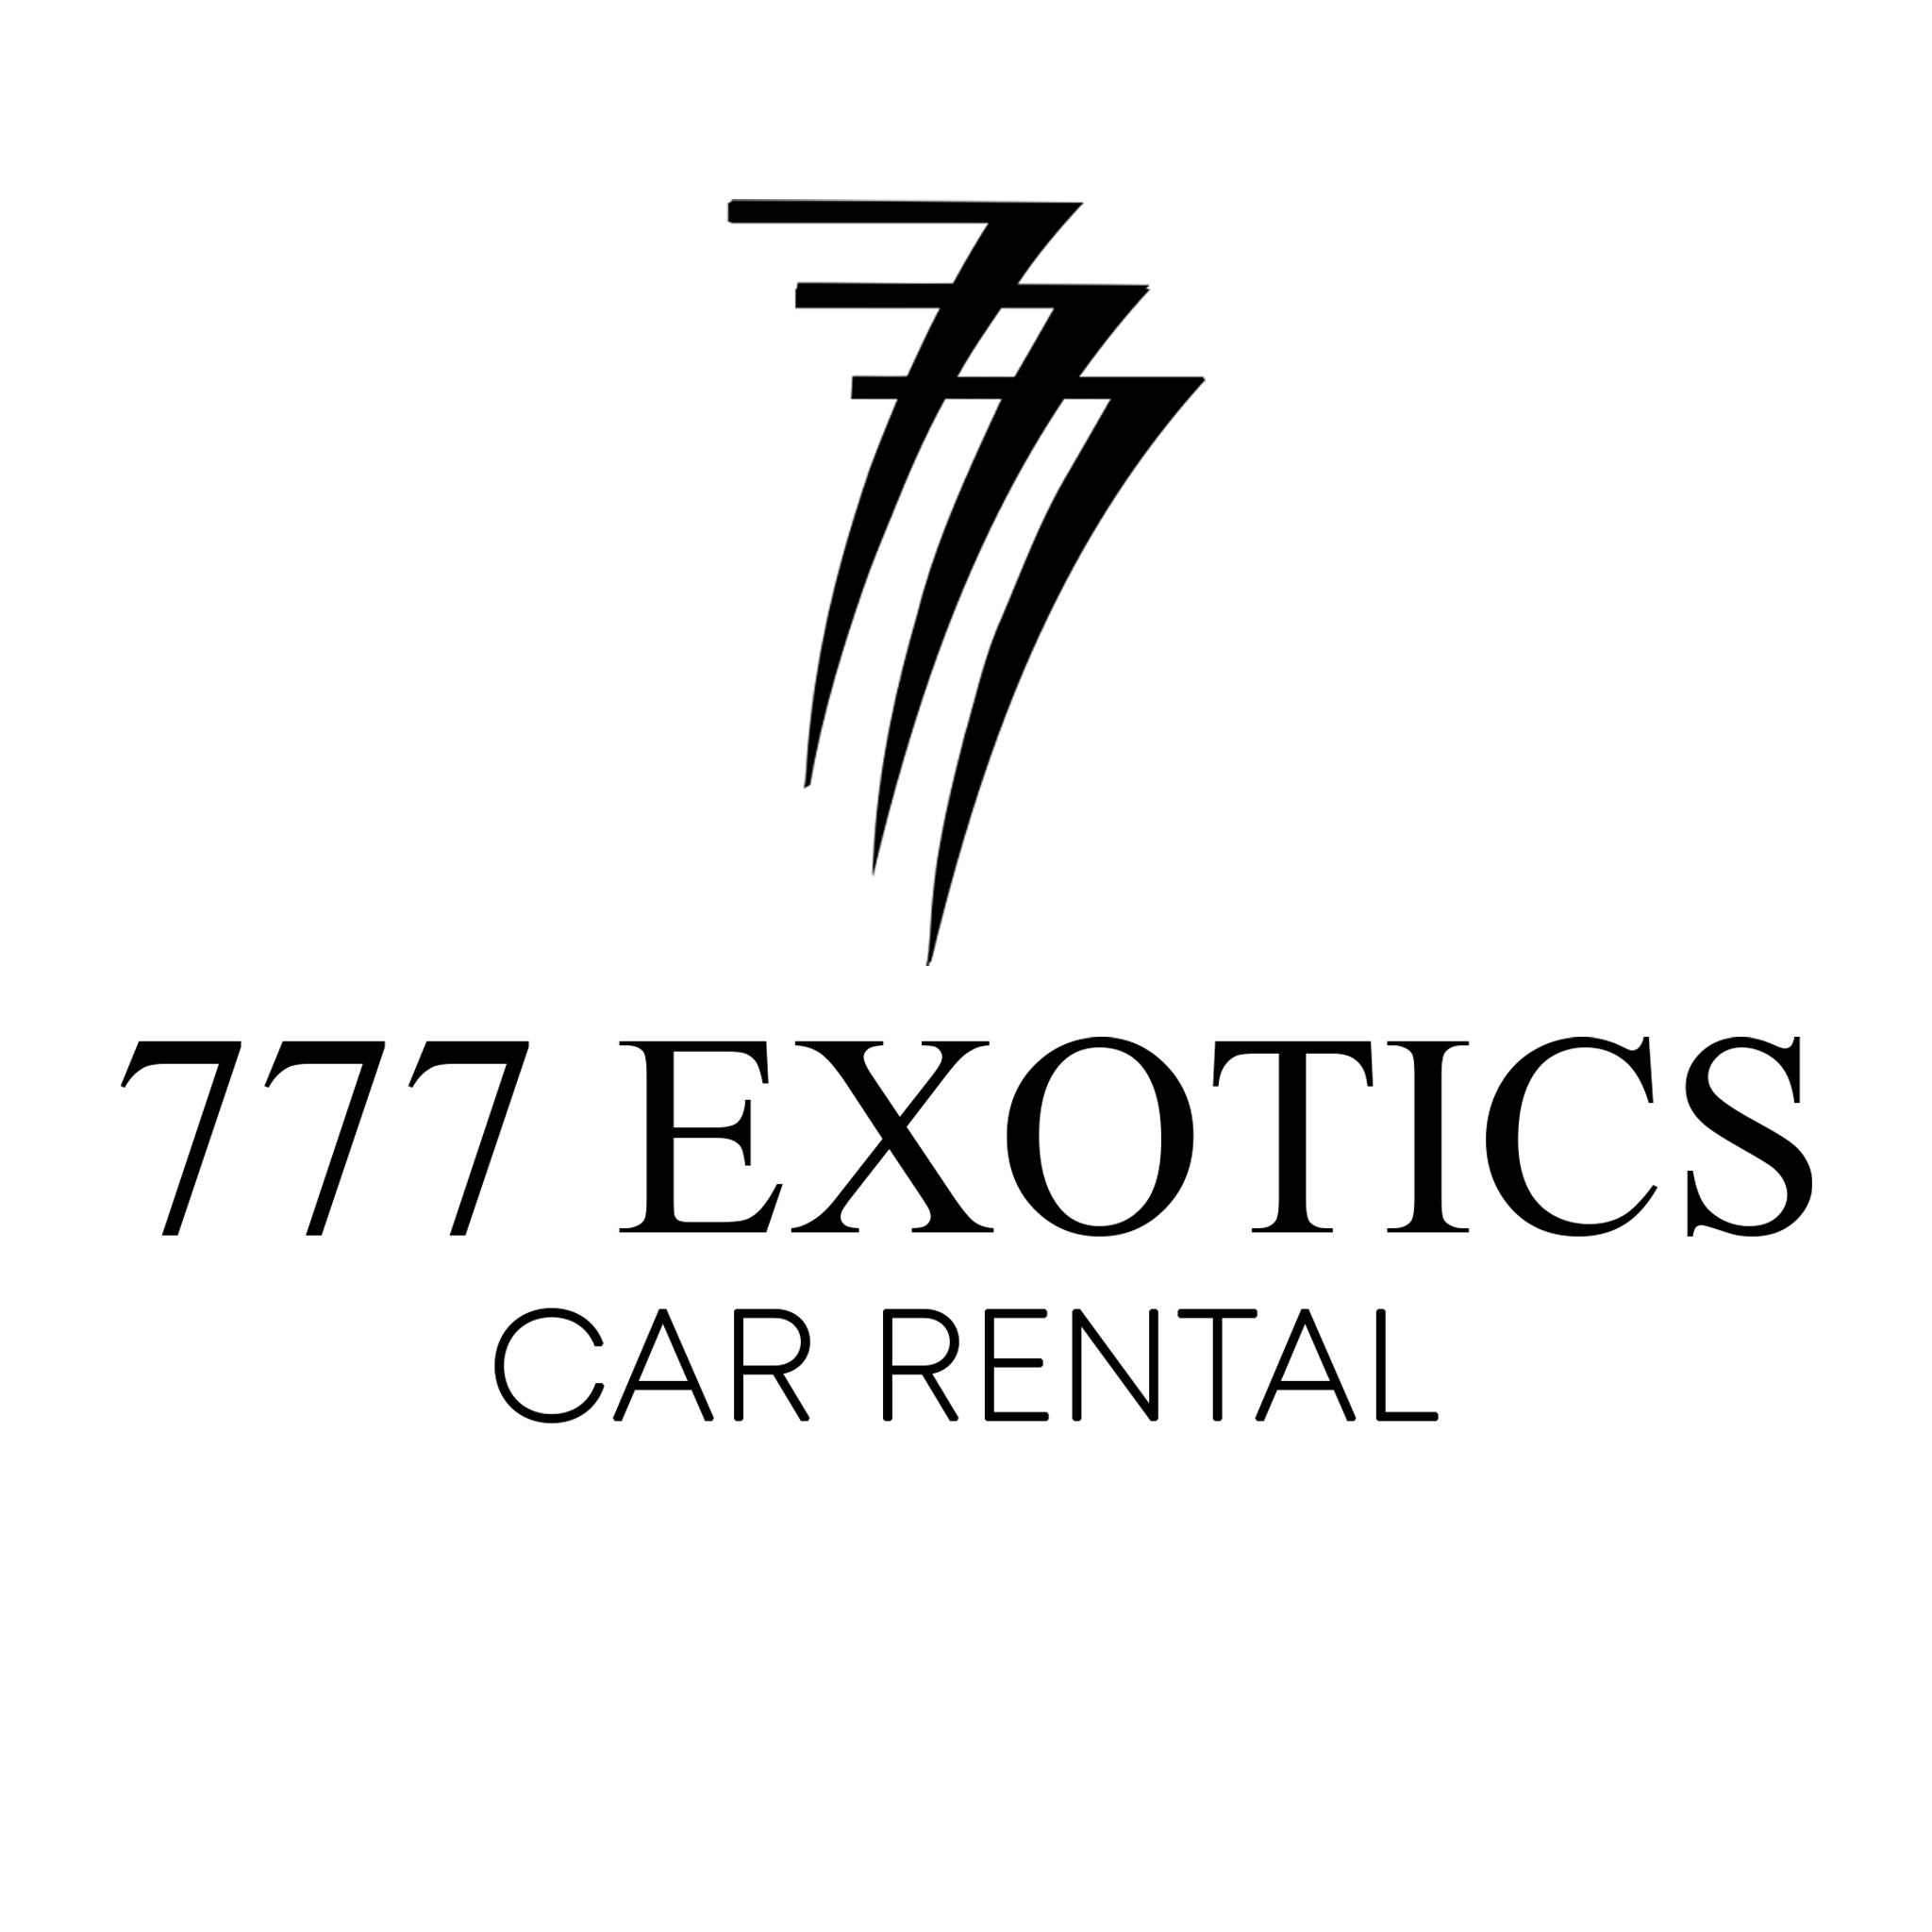 777 Exotics - Luxury Car Rental Los Angeles